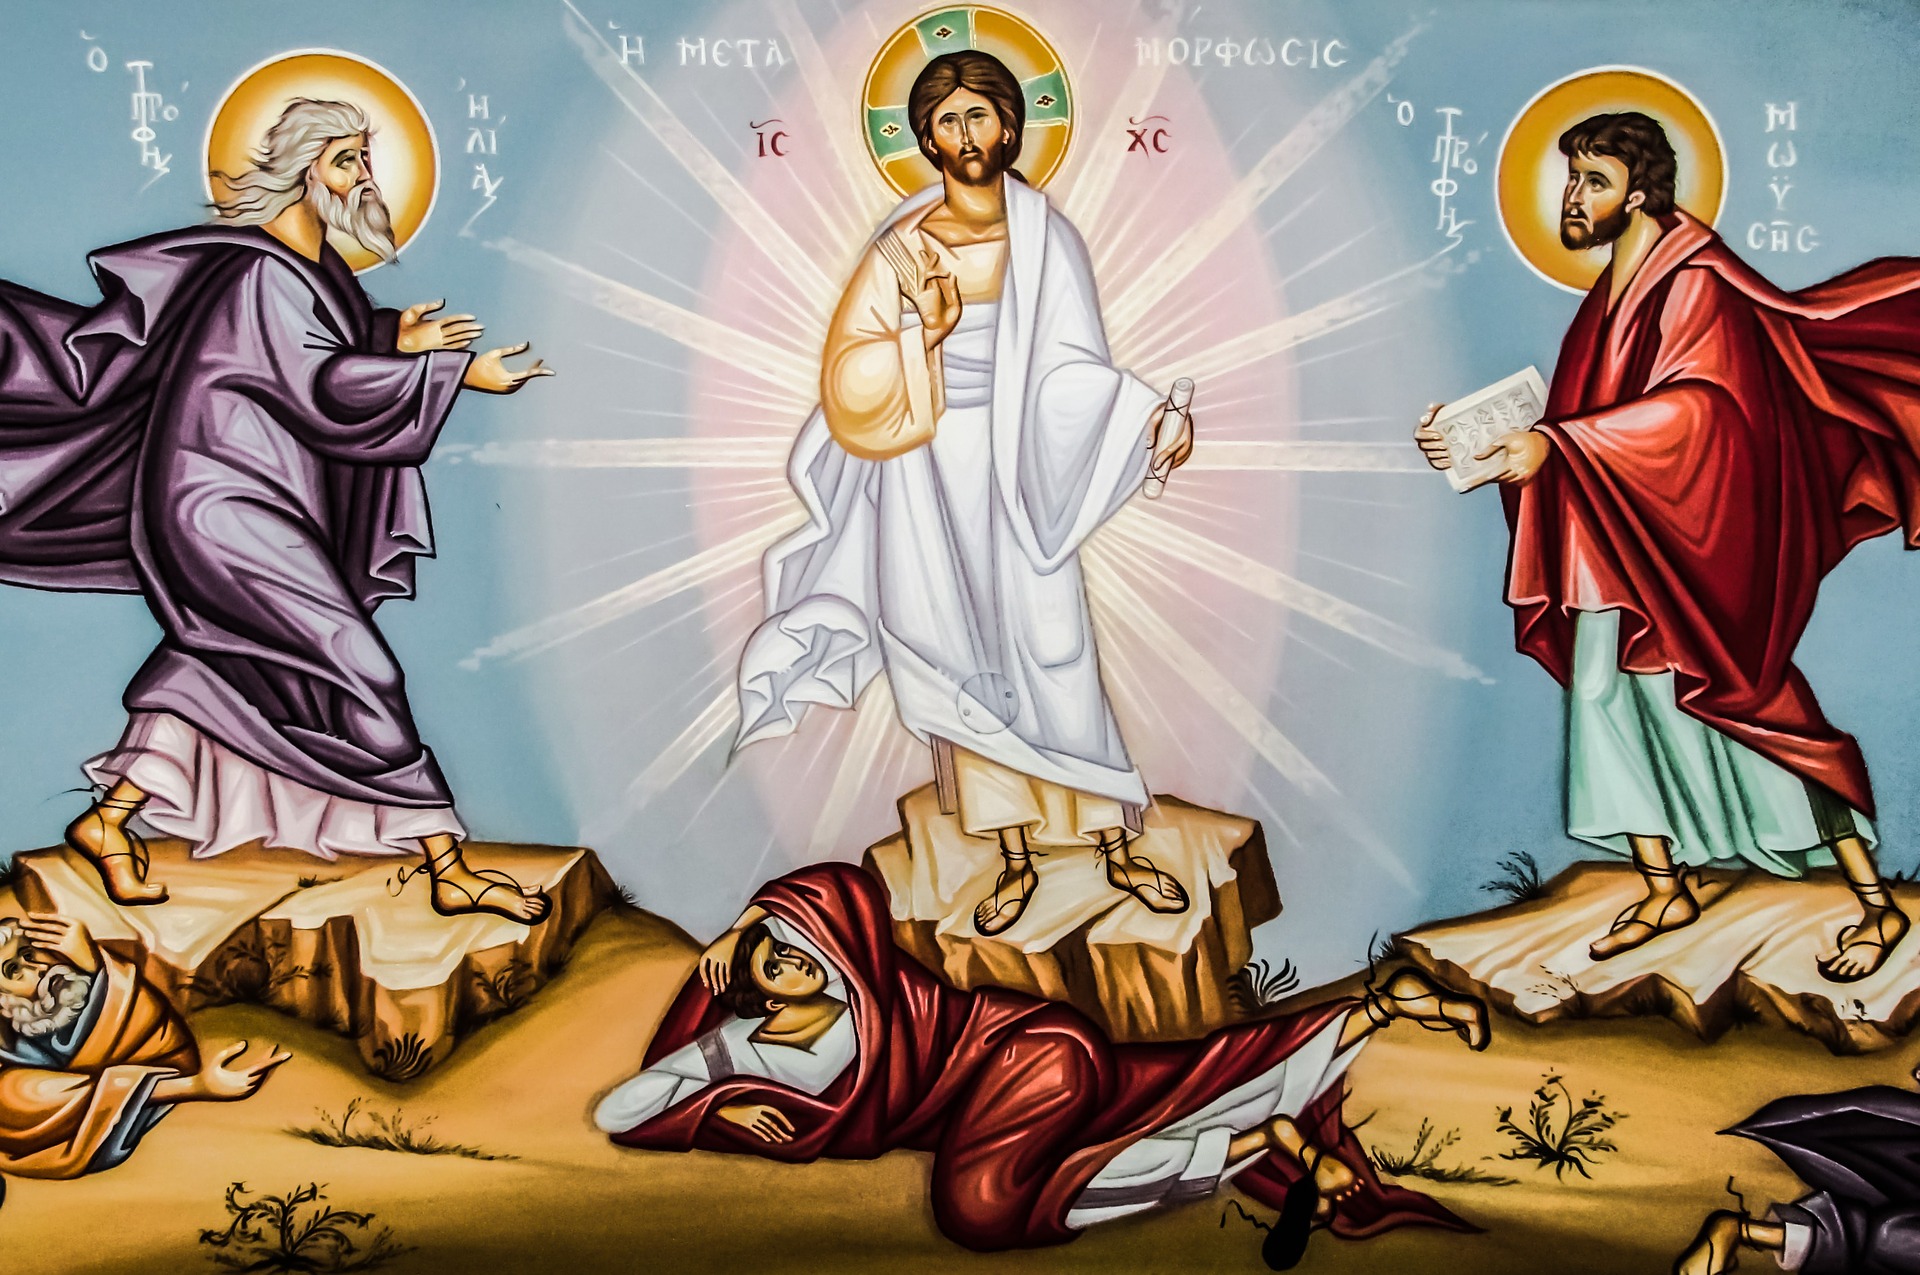 The Prophetic Provocation / The Transfiguration Advantage